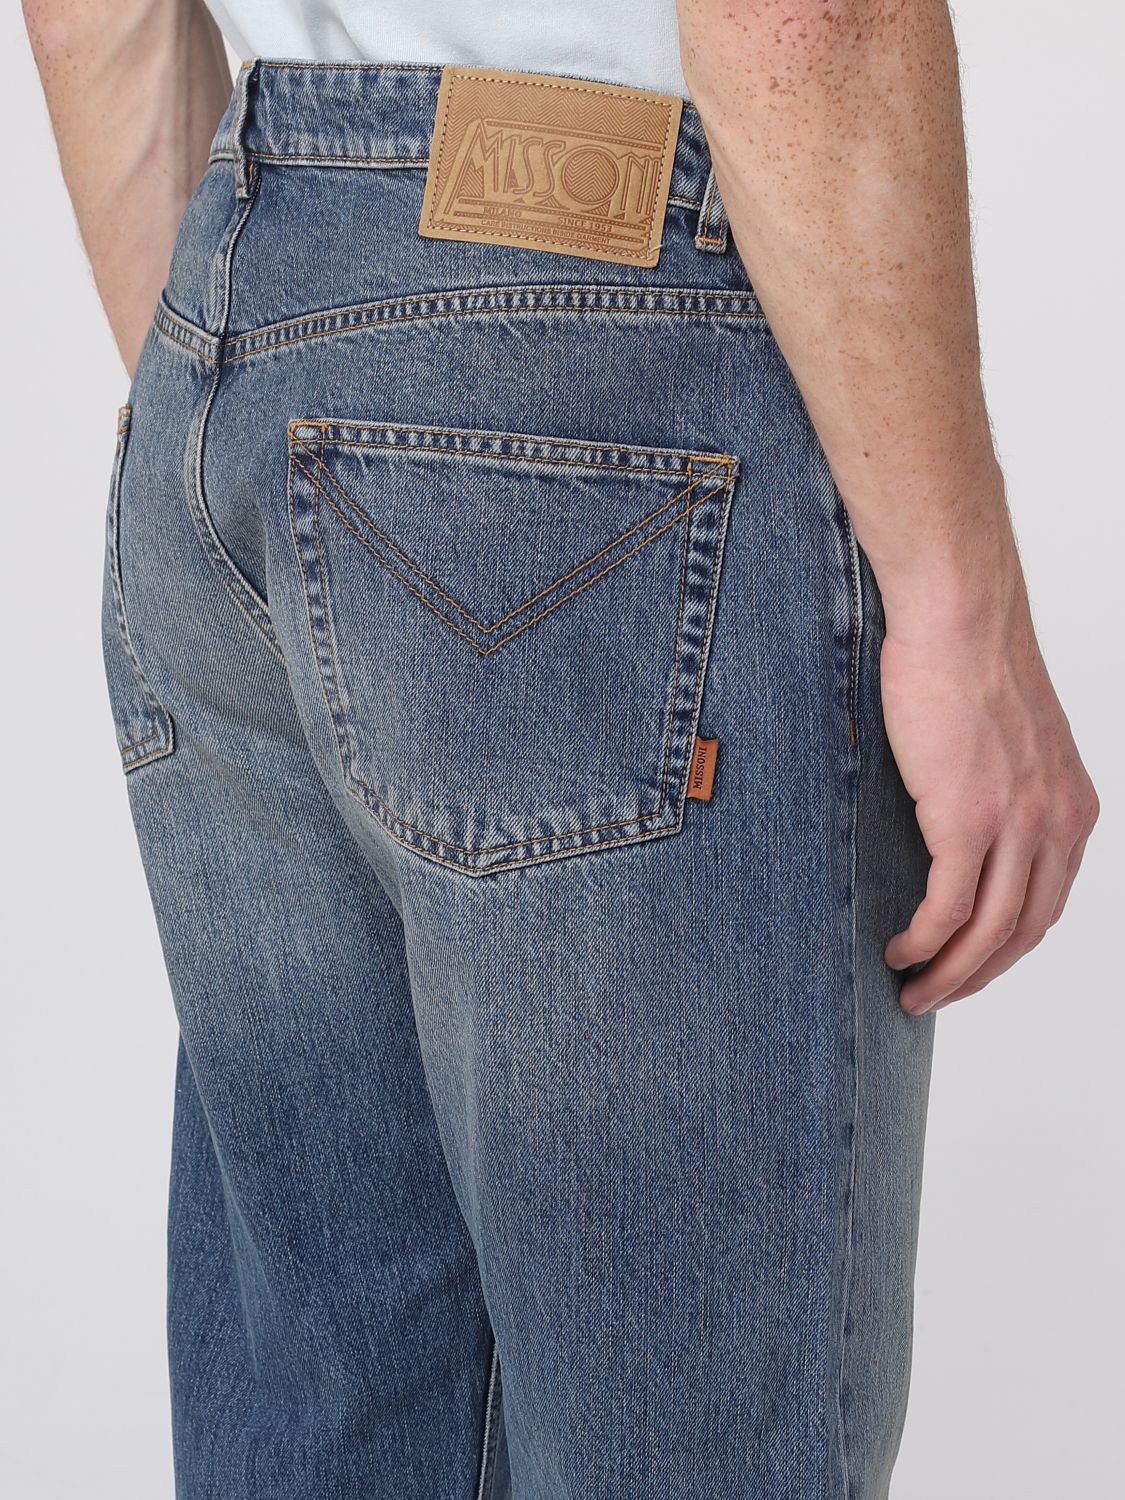 MISSONI: jeans for man - Denim | Missoni jeans US23SI0NBW00LP online on ...